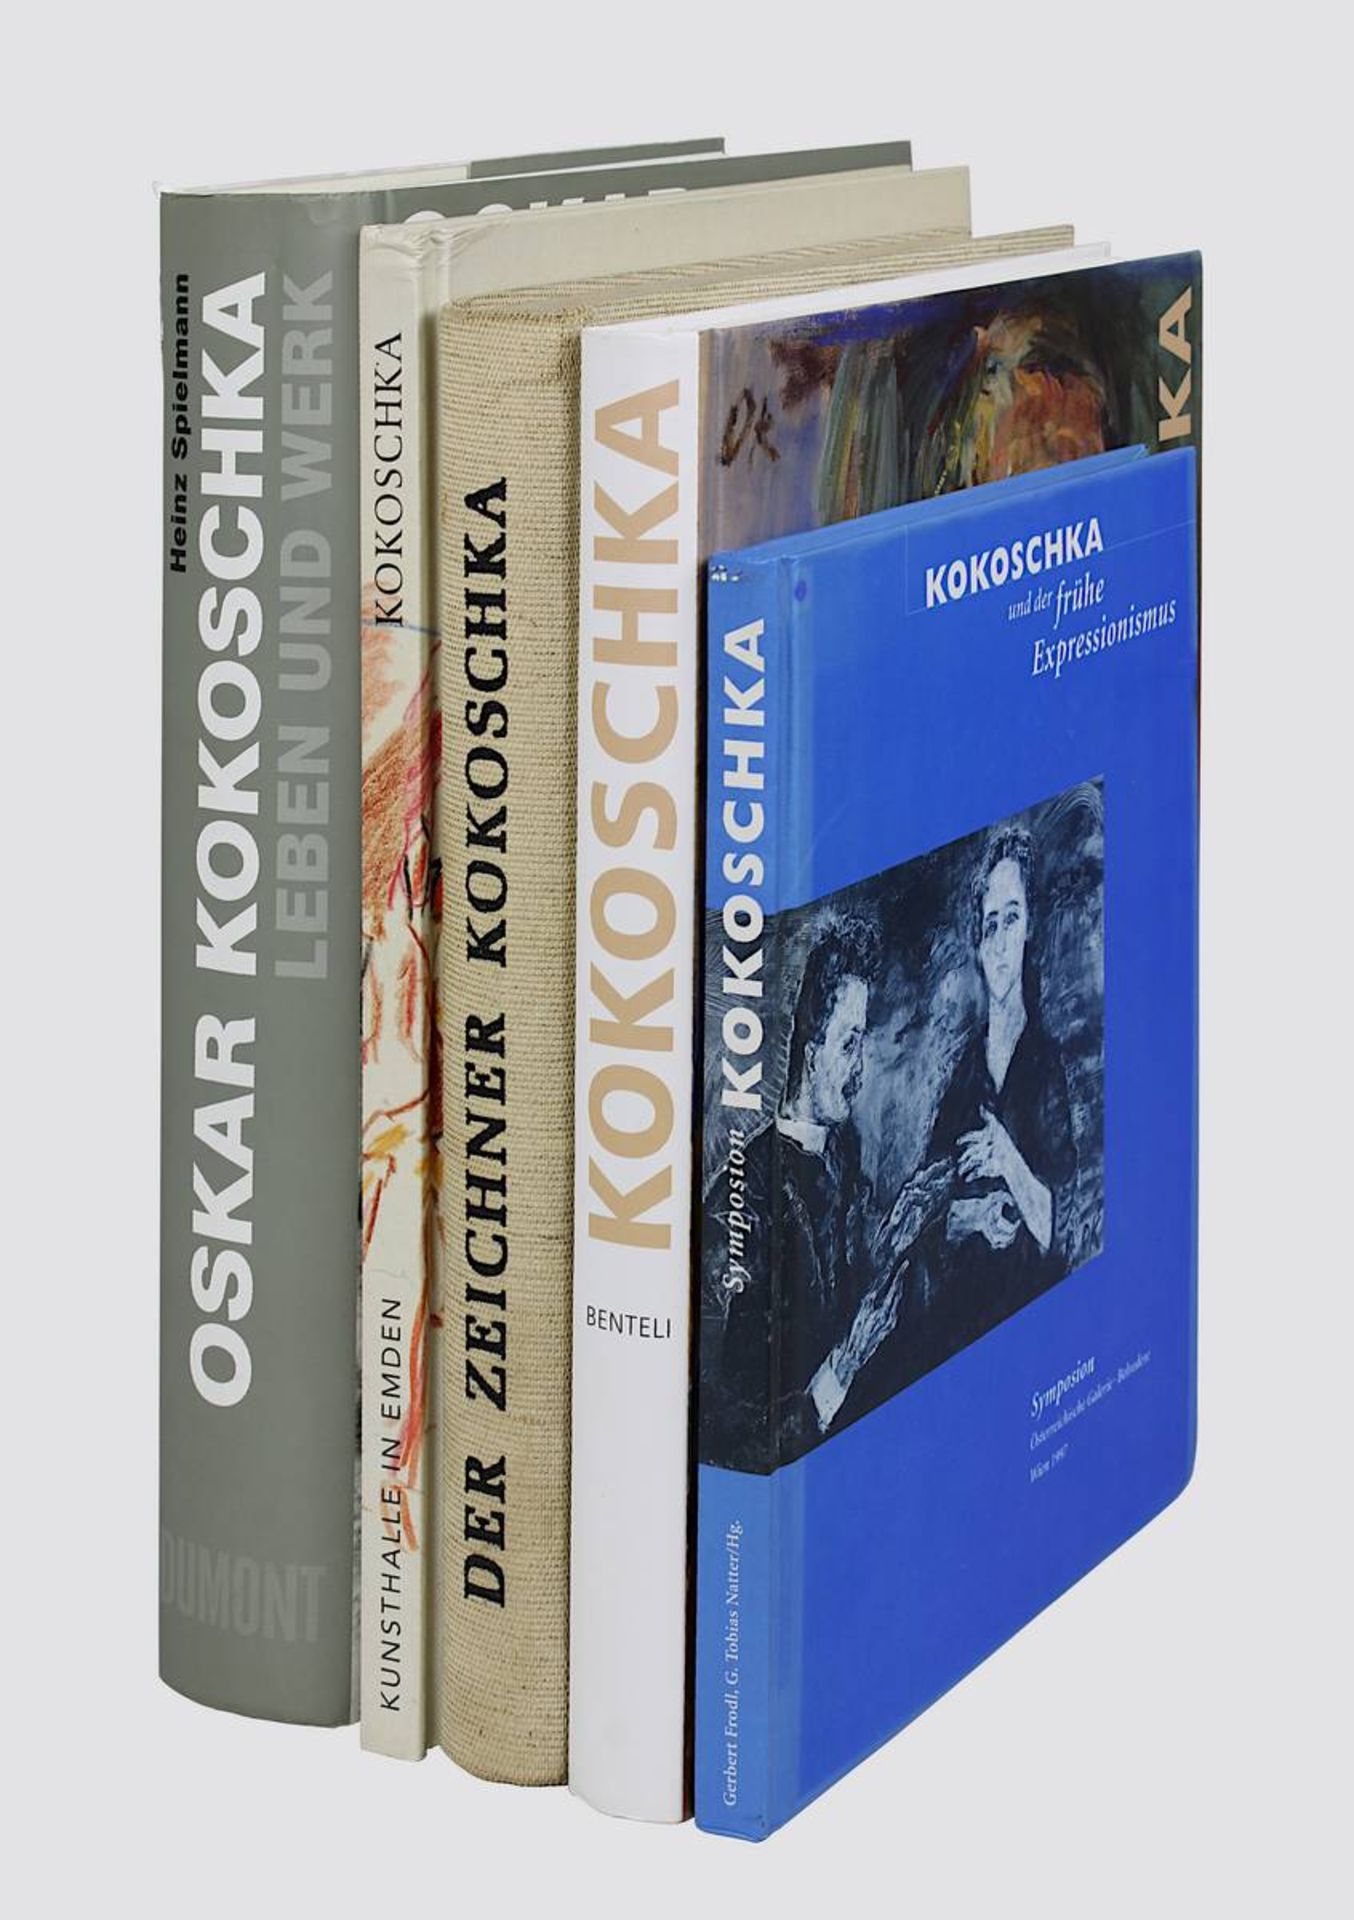 Fünf Bücher zu Oskar Kokoschka, 2. H. 20. Jh.: H. Spielmann, "O. Kokoschka Leben und Werk", Köln